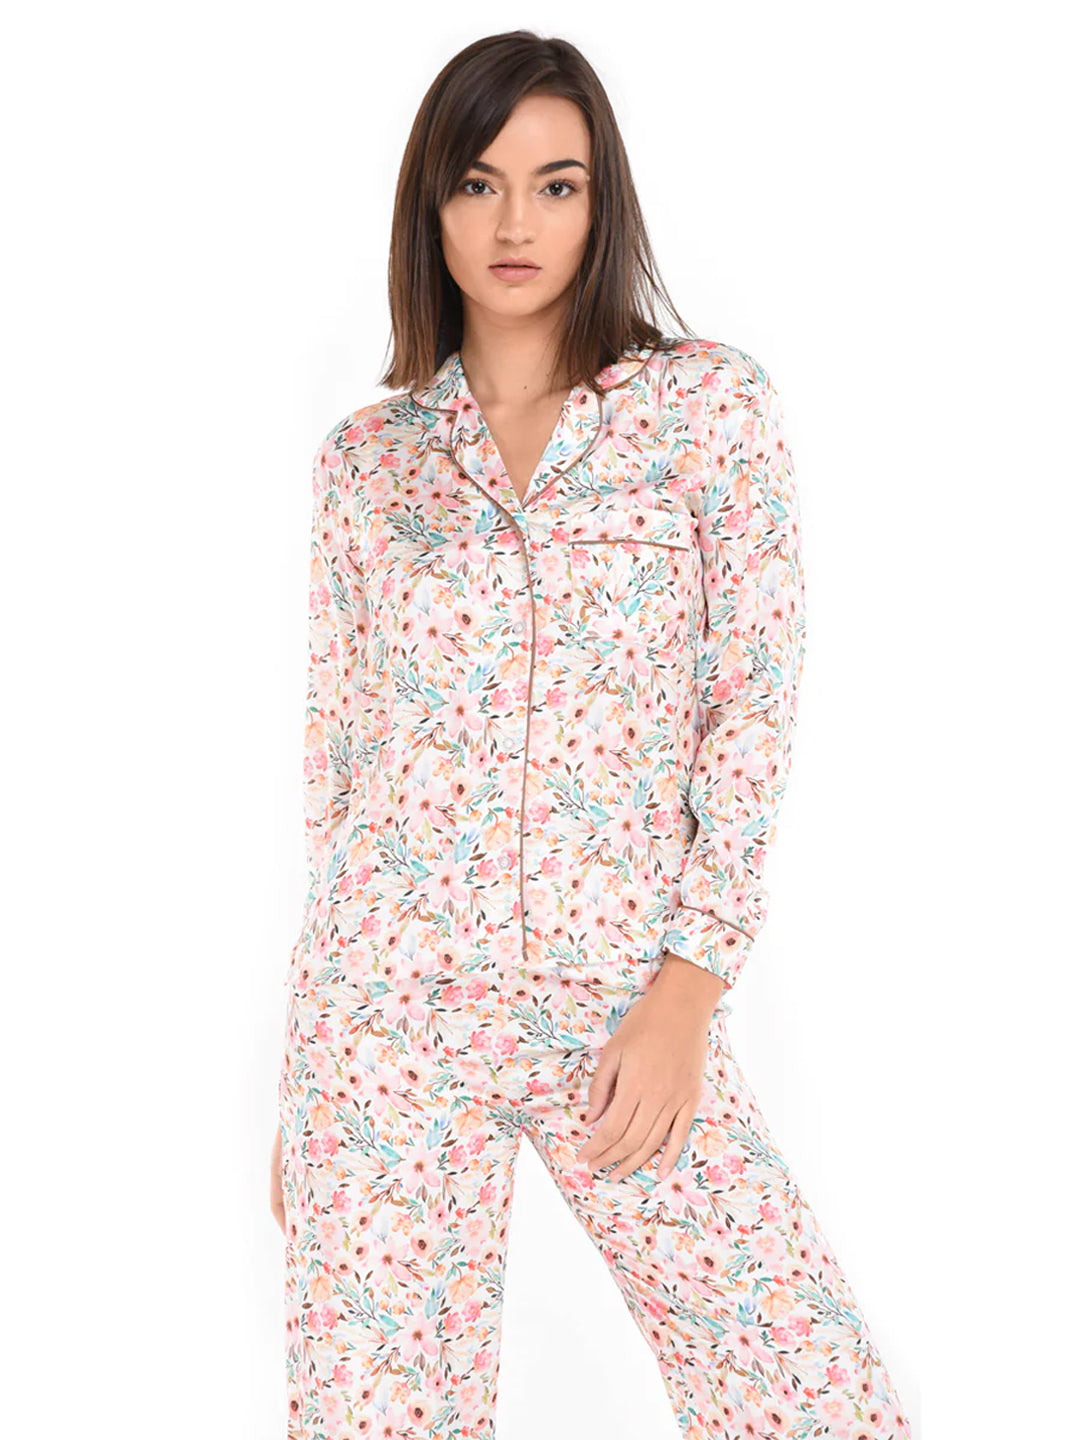 Pyjama Pant With Long Sleeves Floral AOP